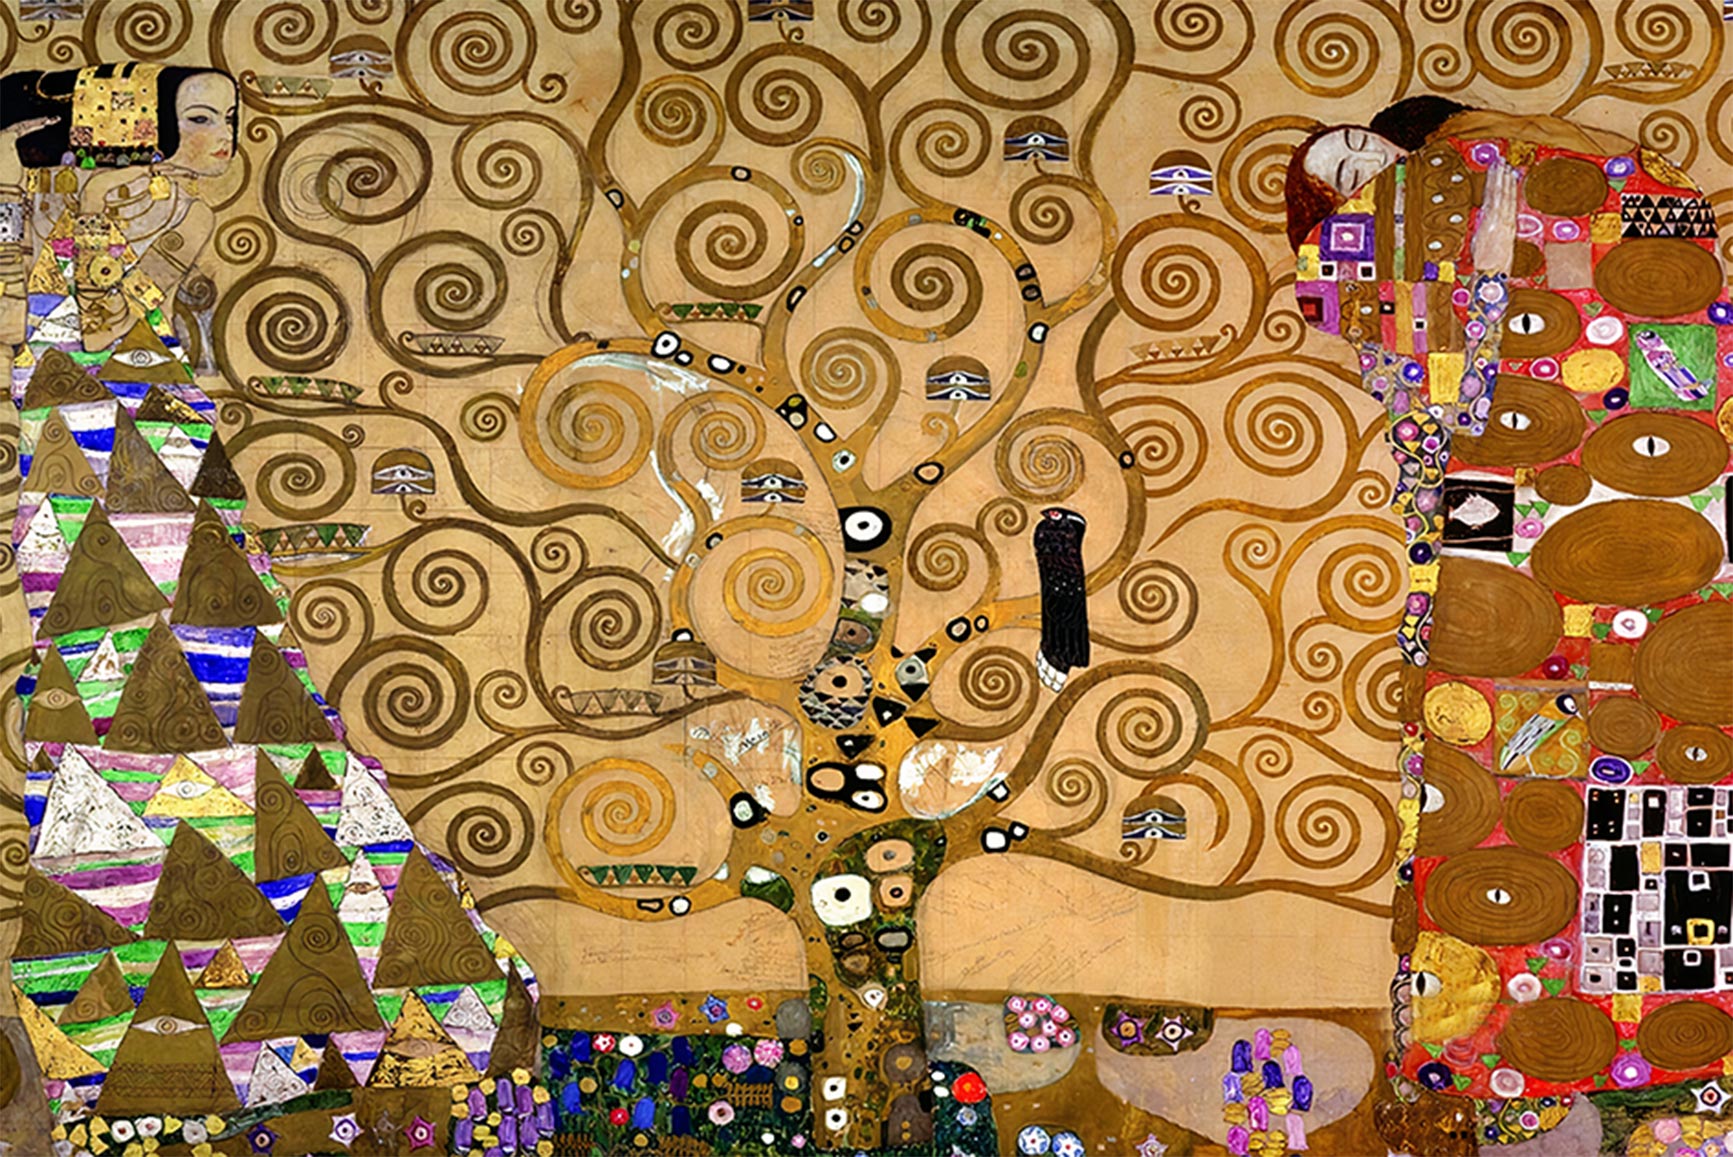 Quadro Retangular  -  Gustav Klimt - The Tree of Life, Stoclet Frieze (1905)